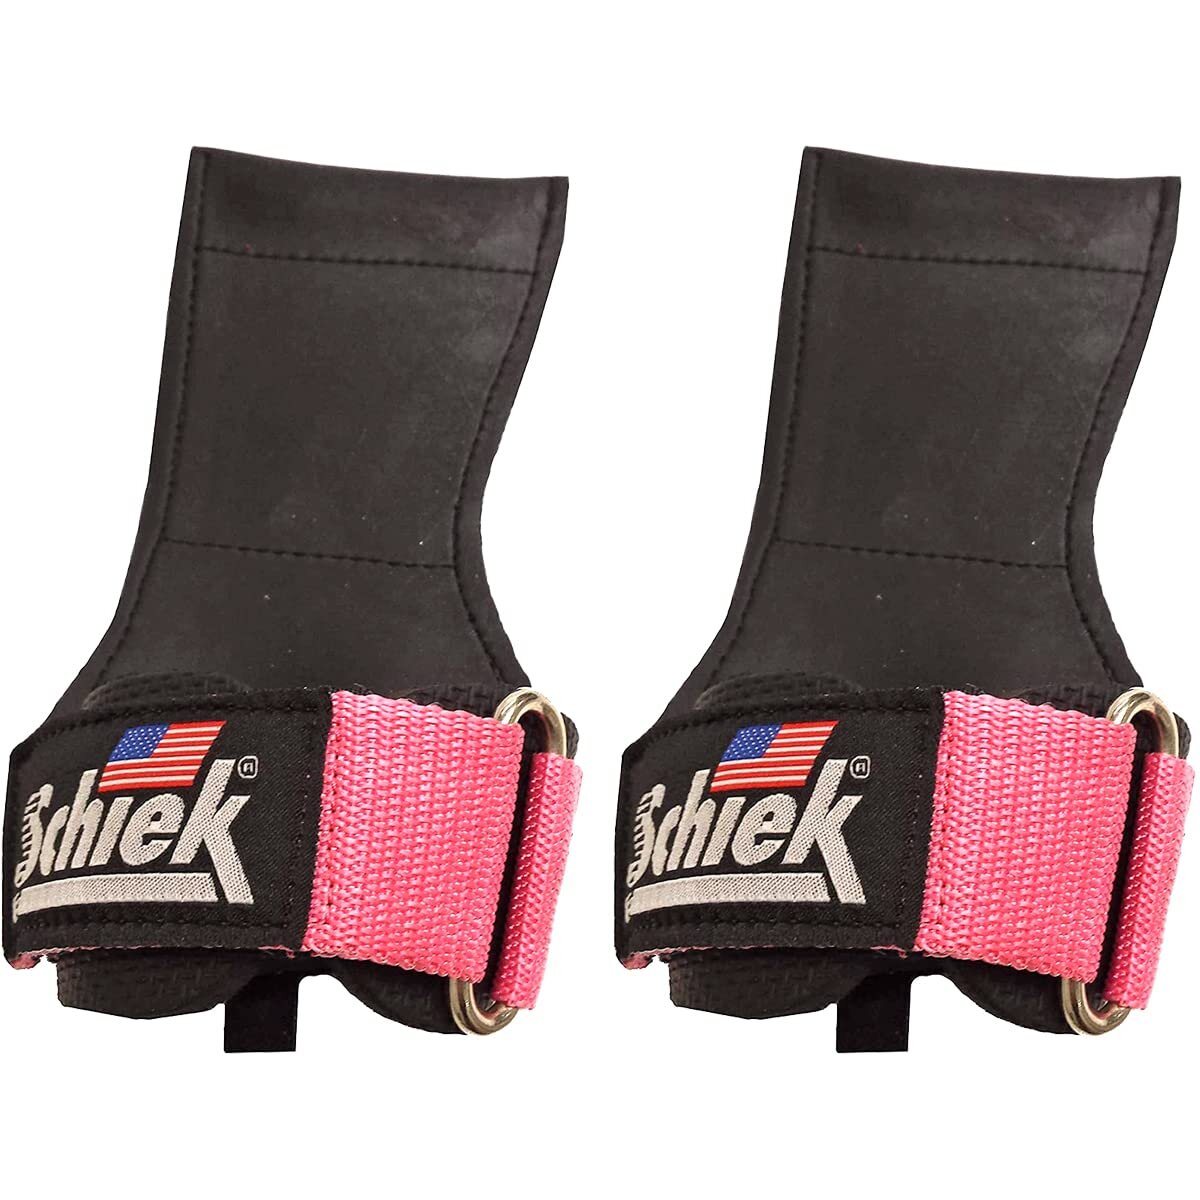 Schiek Sports Model 1900 Ultimate grip Weight Lifting Straps - Medium - Pink